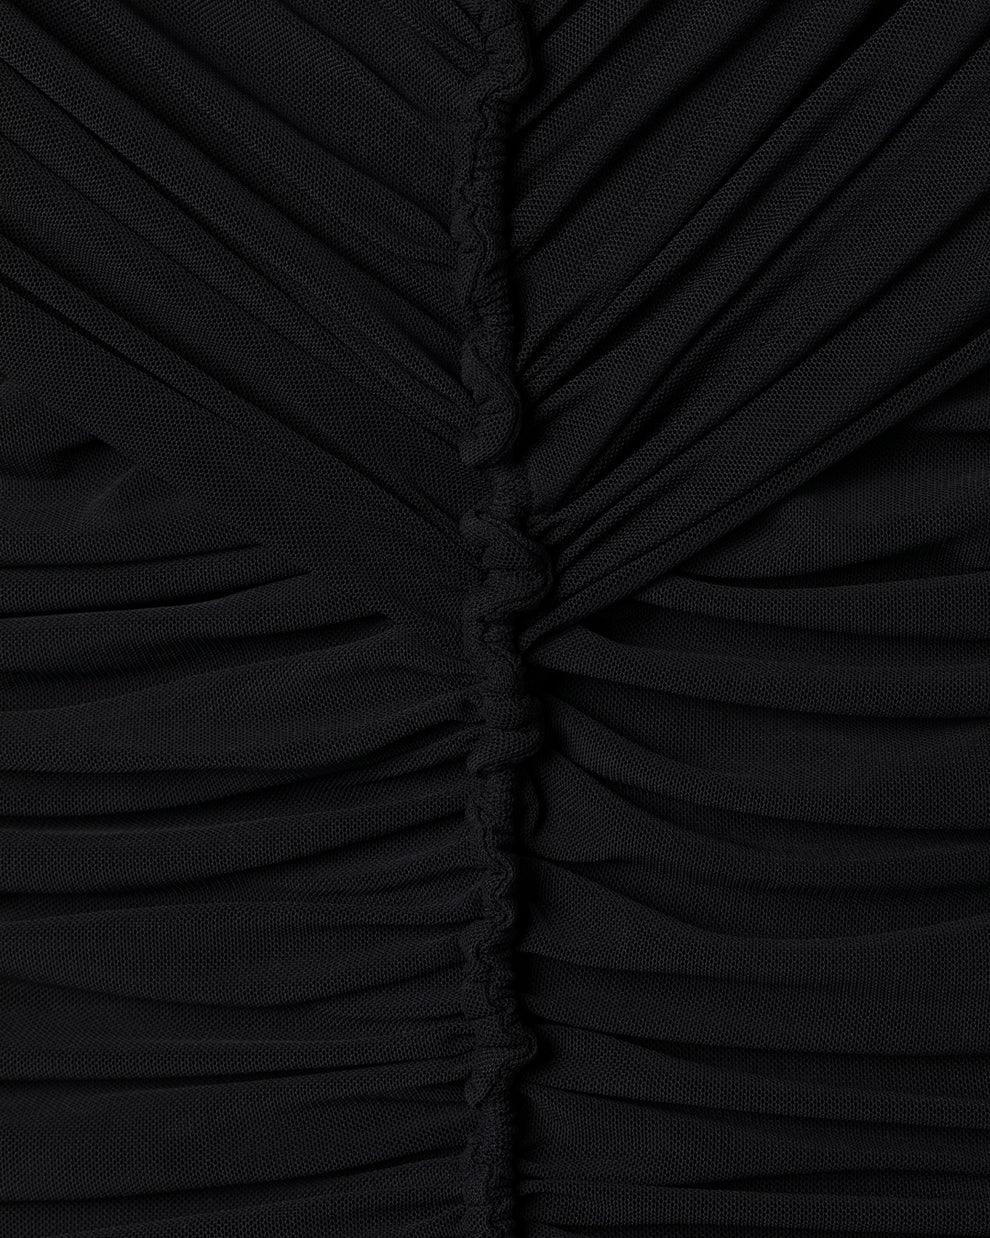 LONG SLEEVE RUCHED DRESS - BLACK - AZ Factory